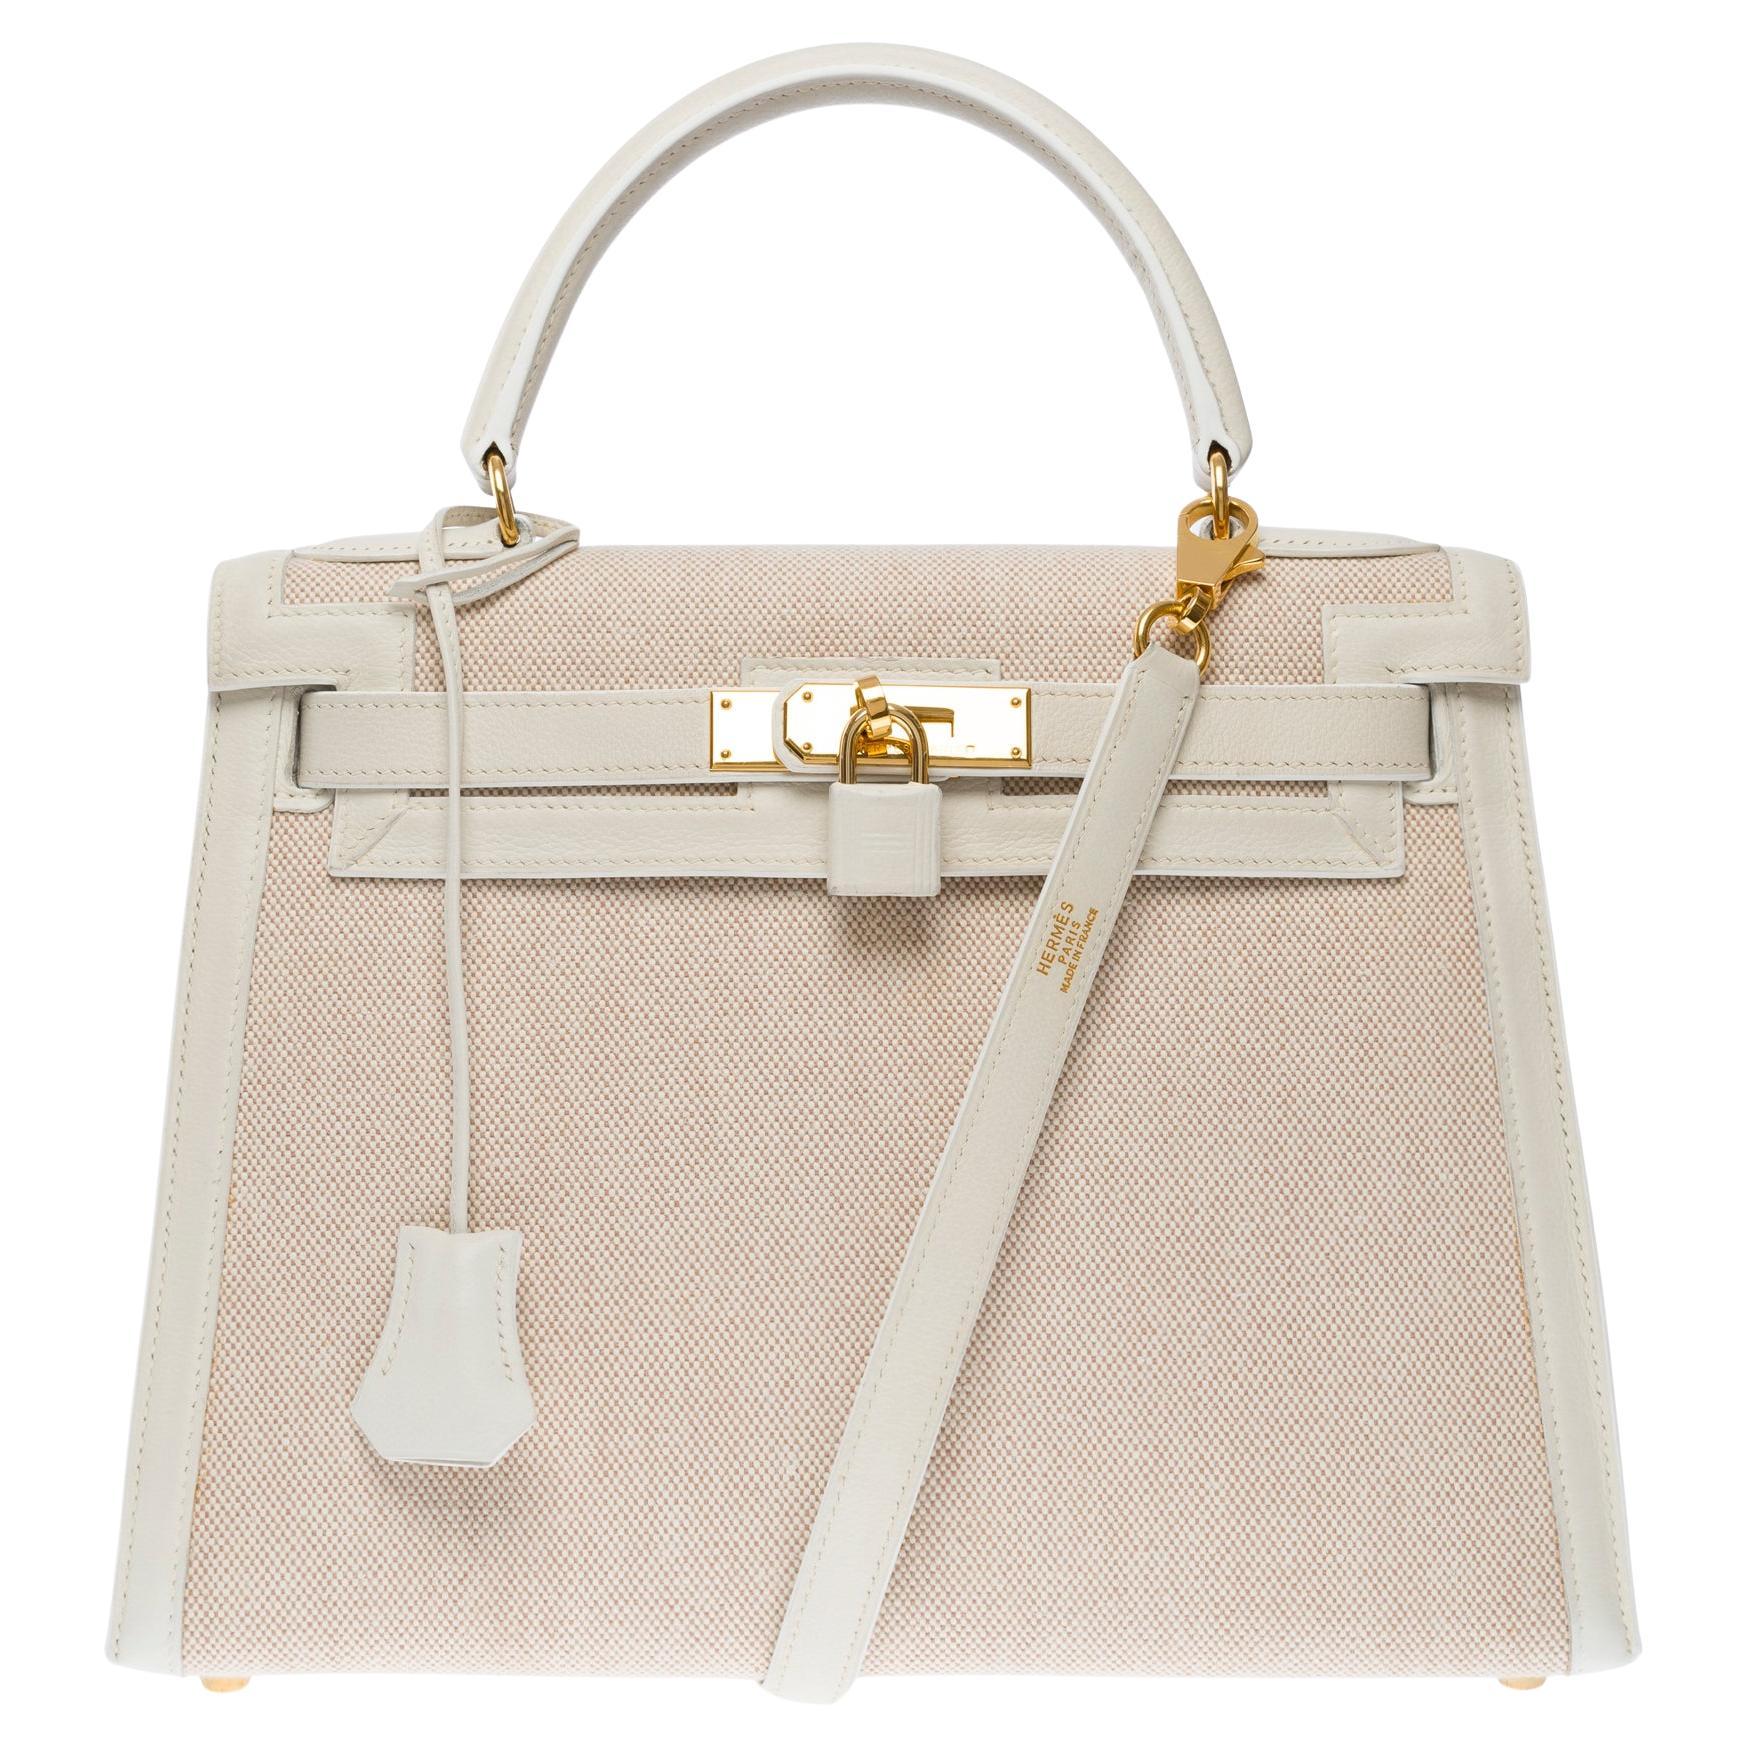 Hermès Kelly 28 Sellier Handbag Strap